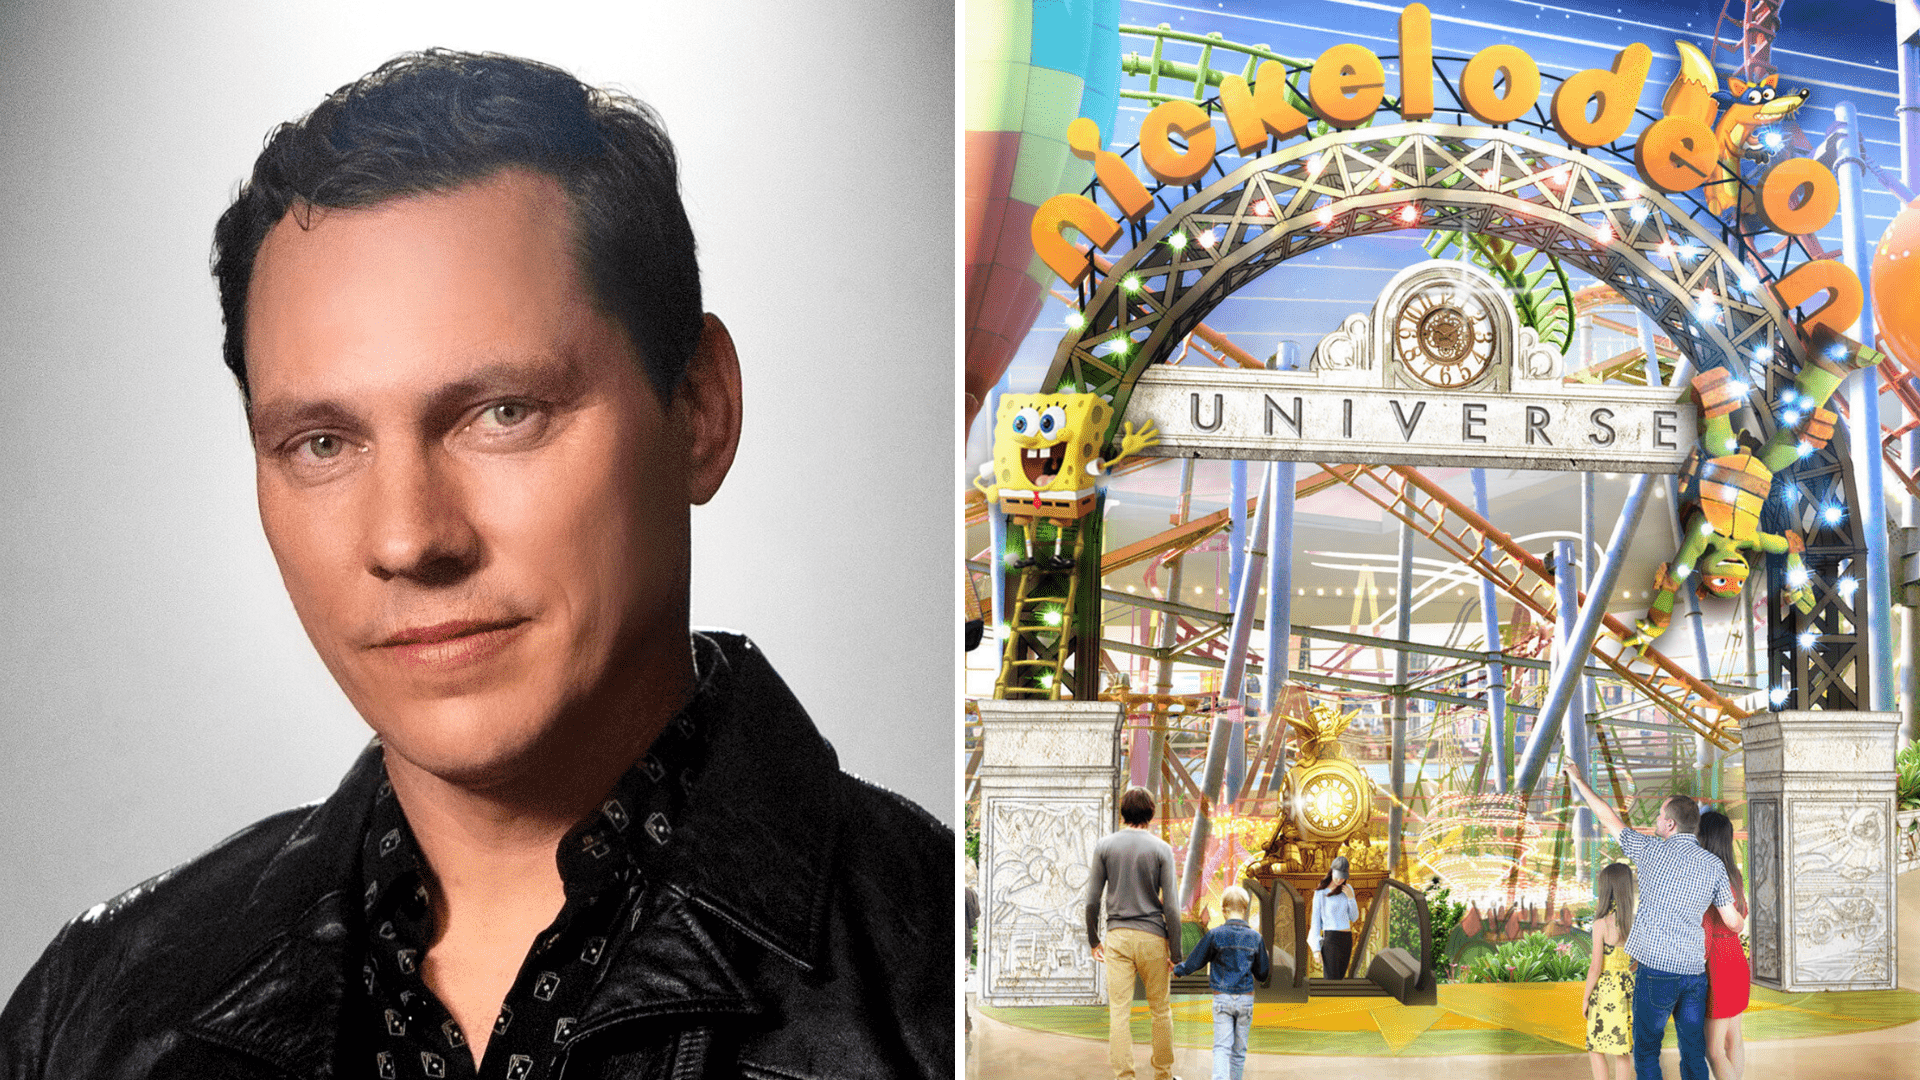 Tiësto set to headline show at Nickelodeon theme park on Thanksgiving Eve